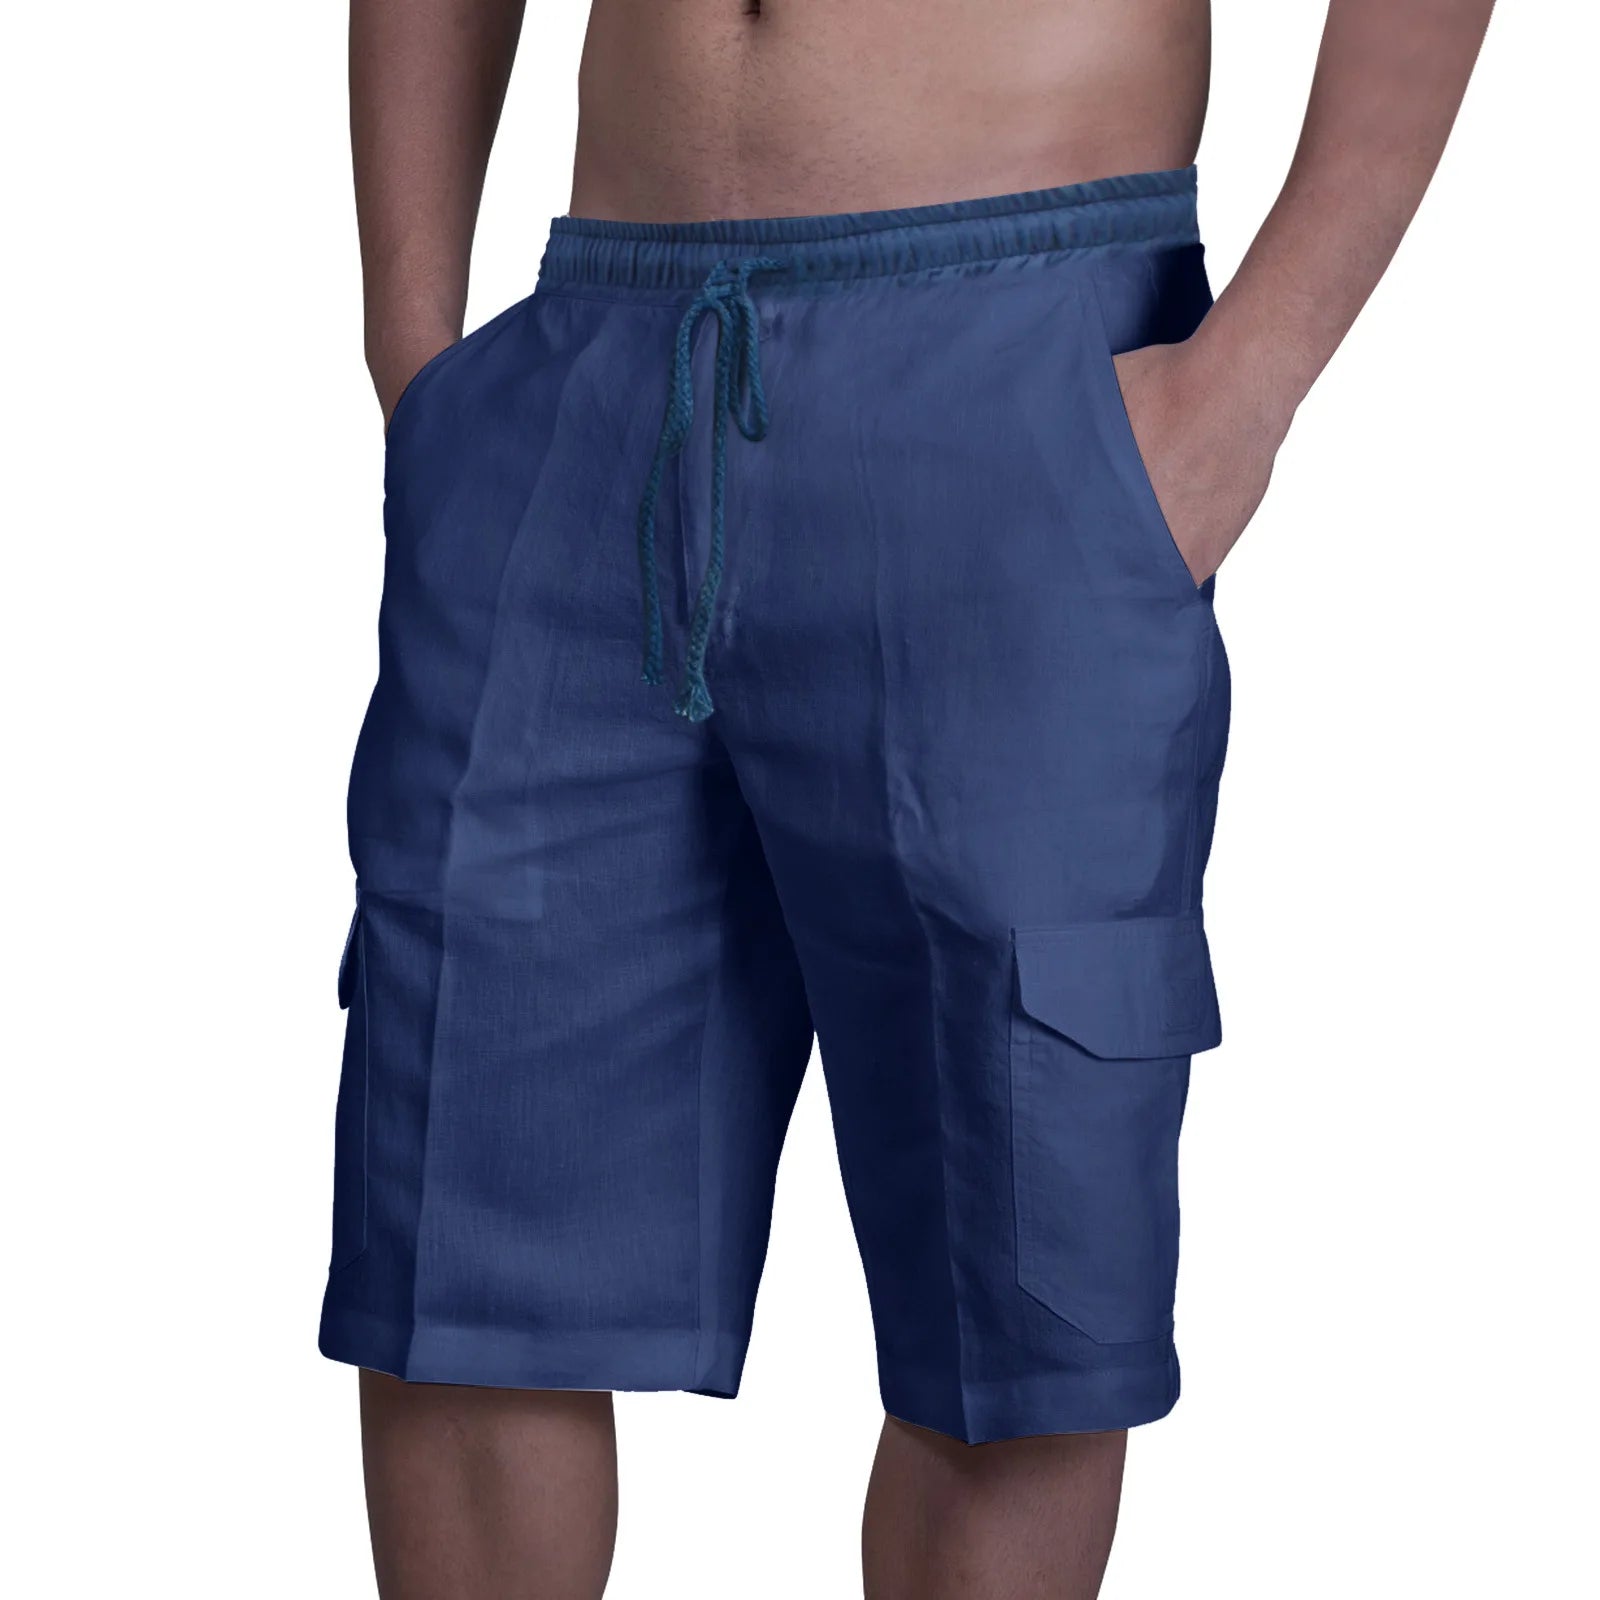 Men's Cotton Linen Shorts Pants Male Summer Breathable Solid Color Linen Trousers Fitness Streetwear